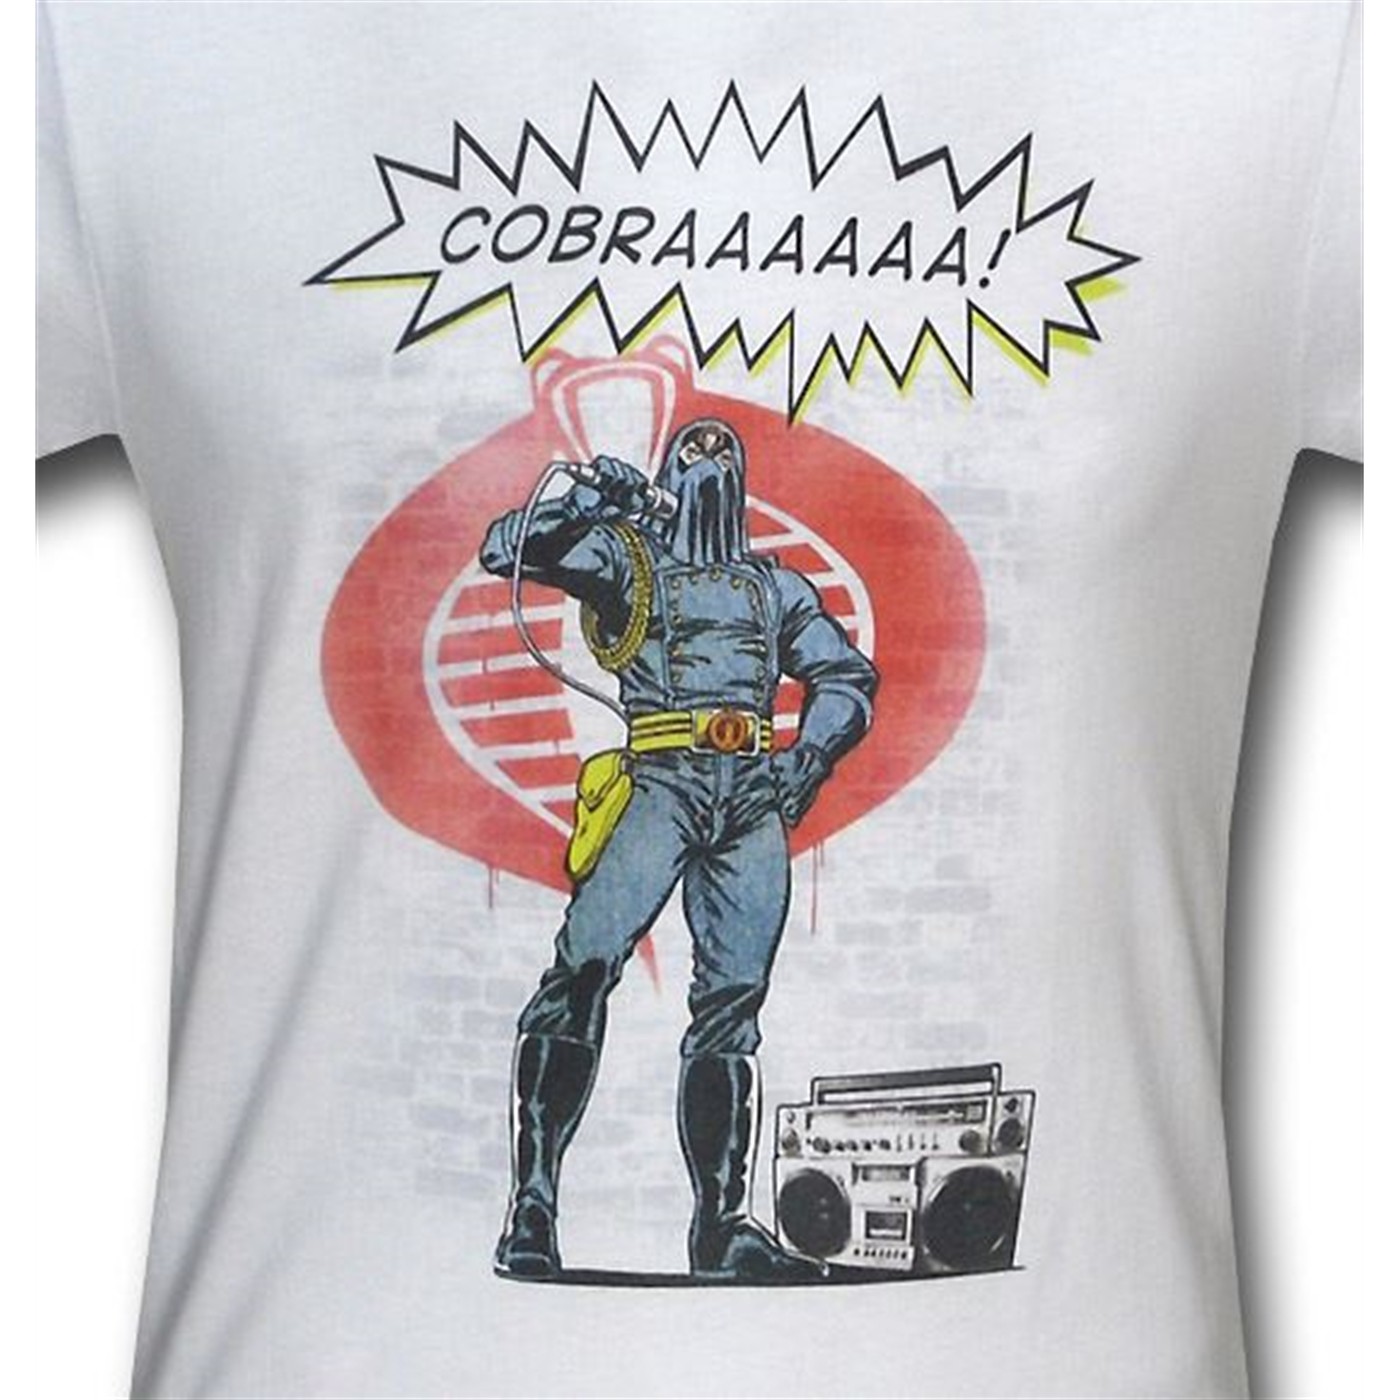 Cobra Commander COBRAAA! 30 Single T-Shirt